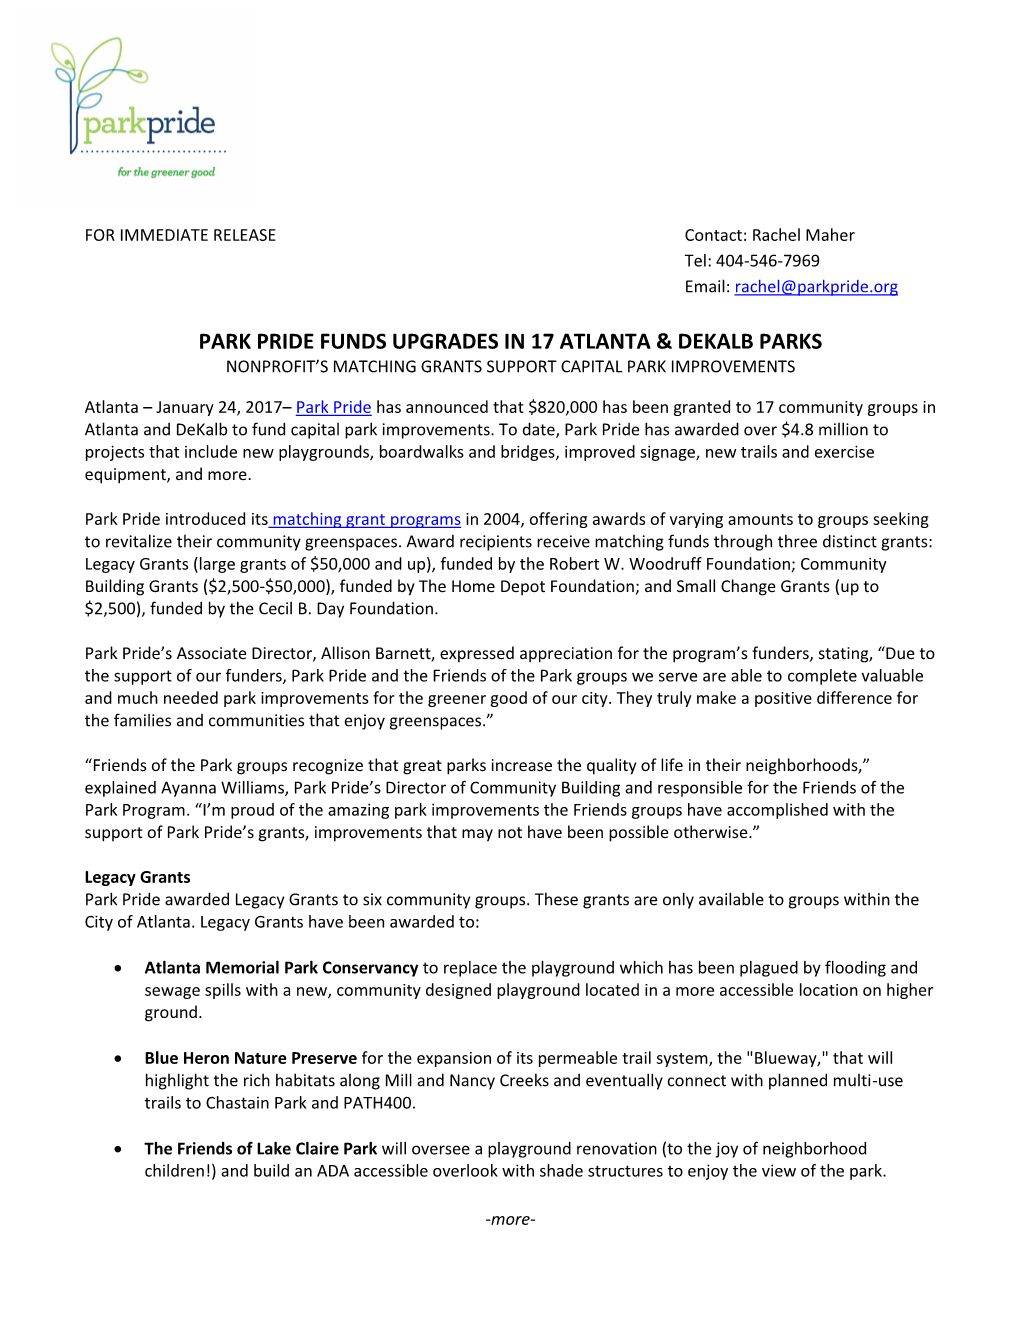 Park Pride Funds Upgrades in 17 Atlanta & Dekalb Parks